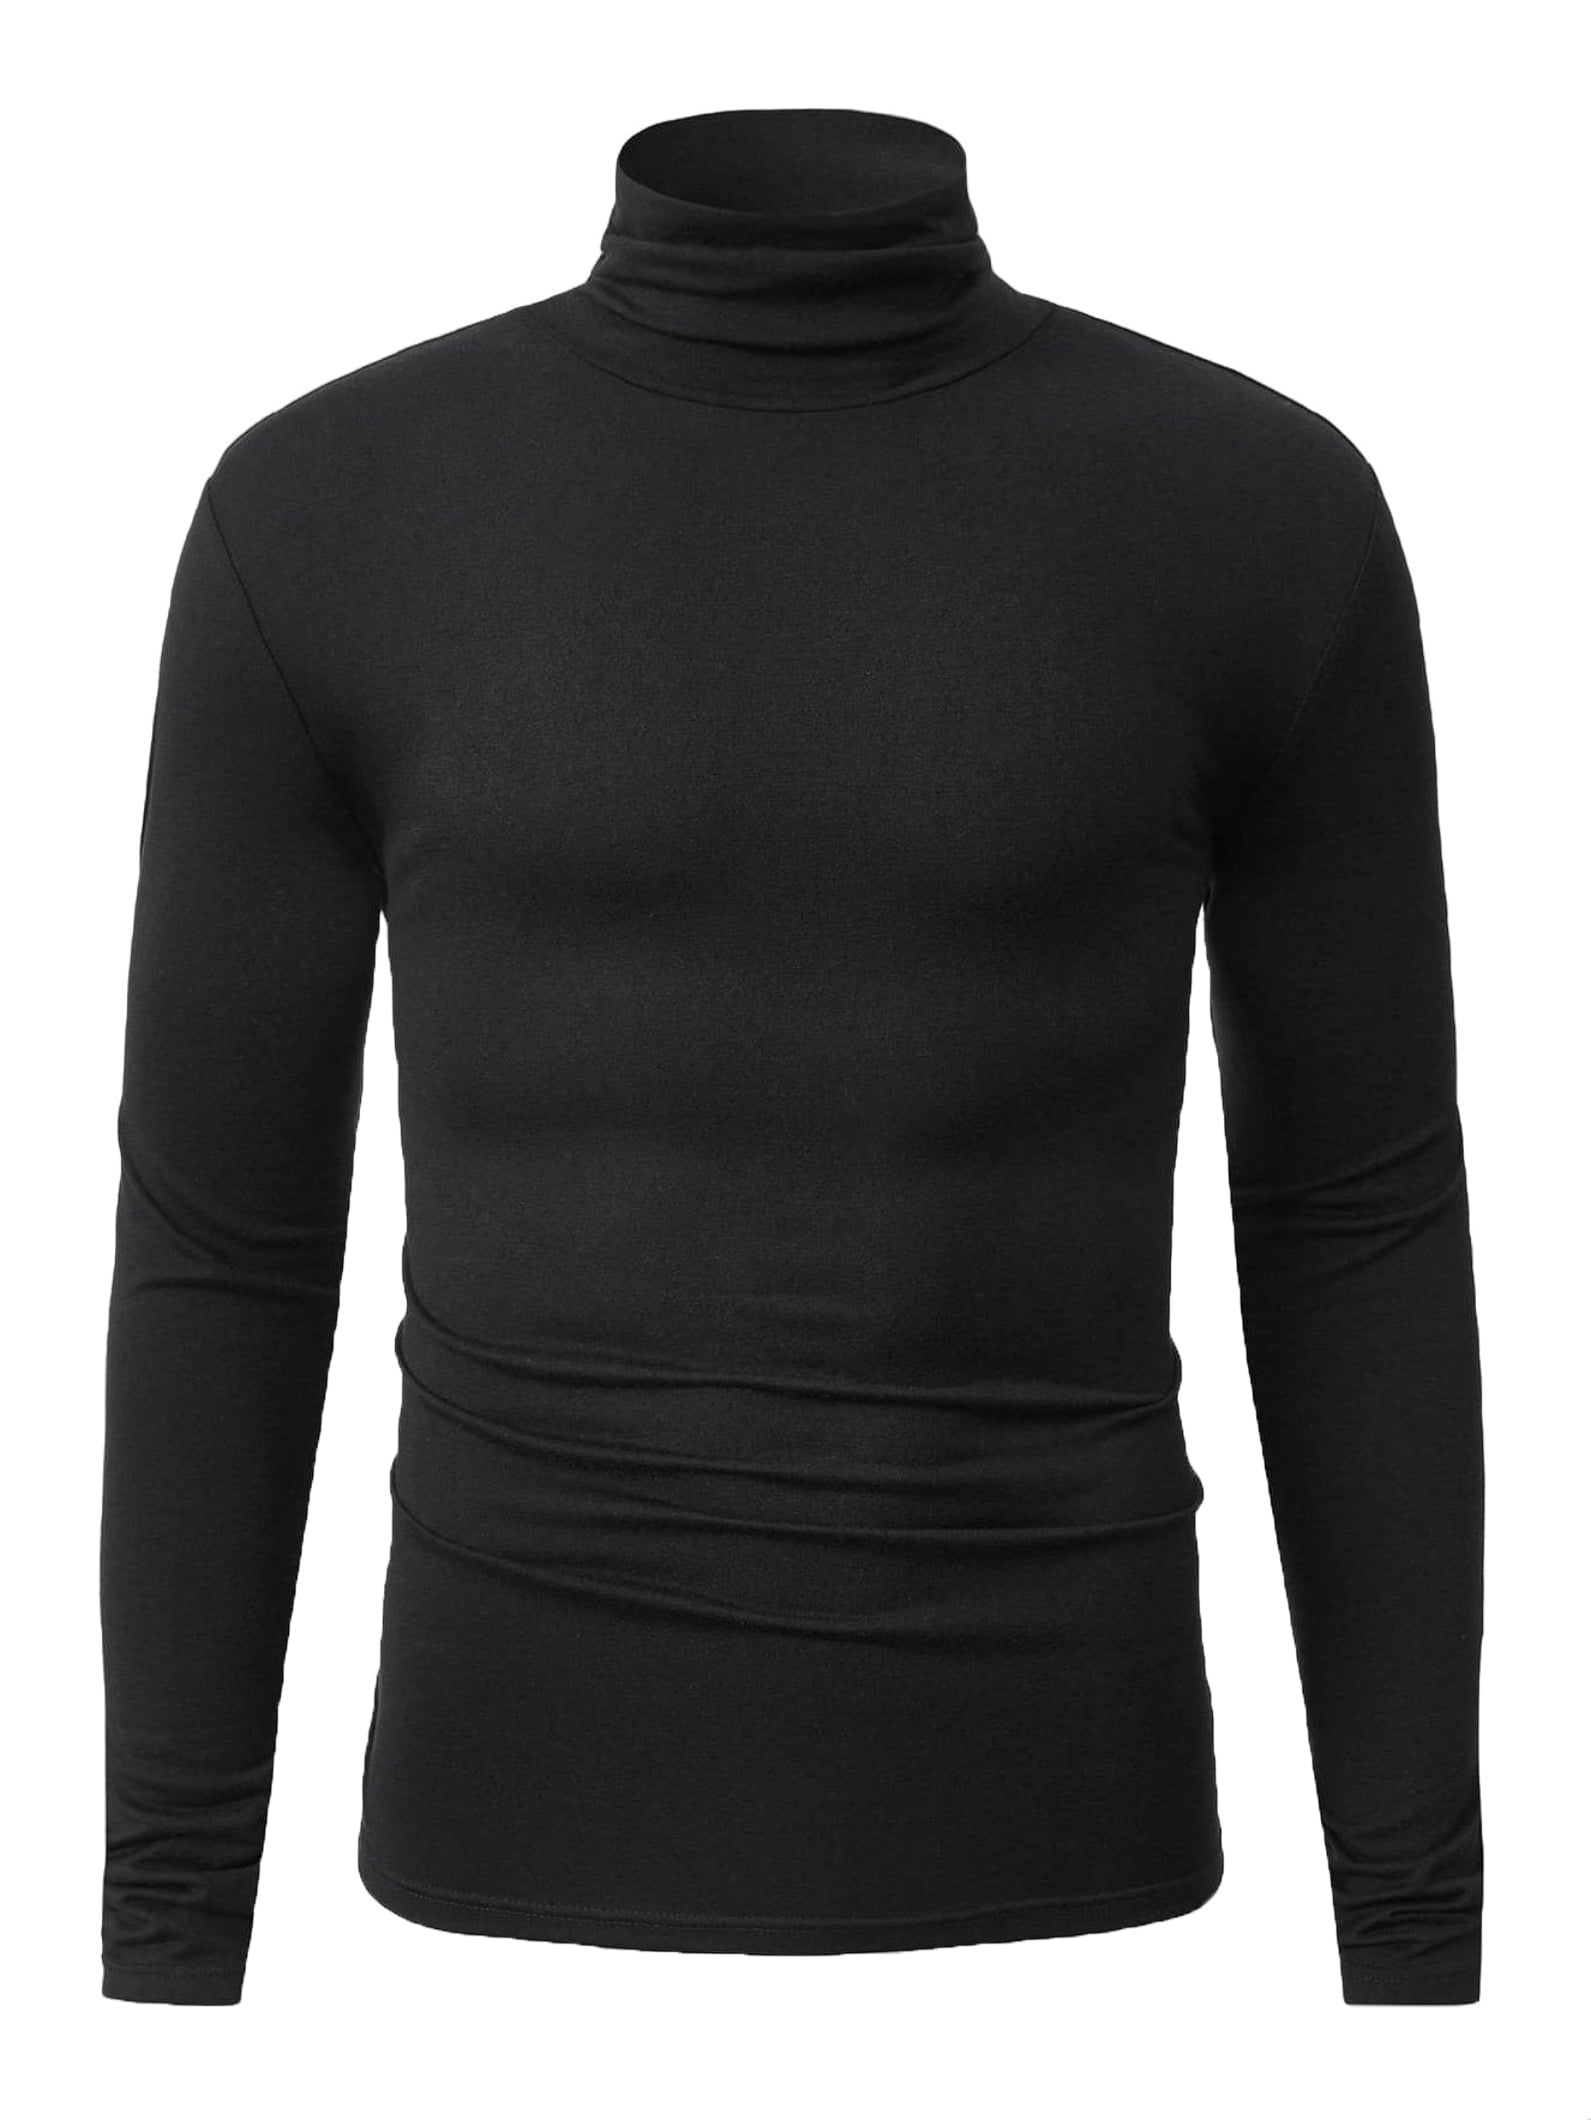 Men Casual Plain High Neck Black Long Sleeve T-Shirts S - Walmart.com